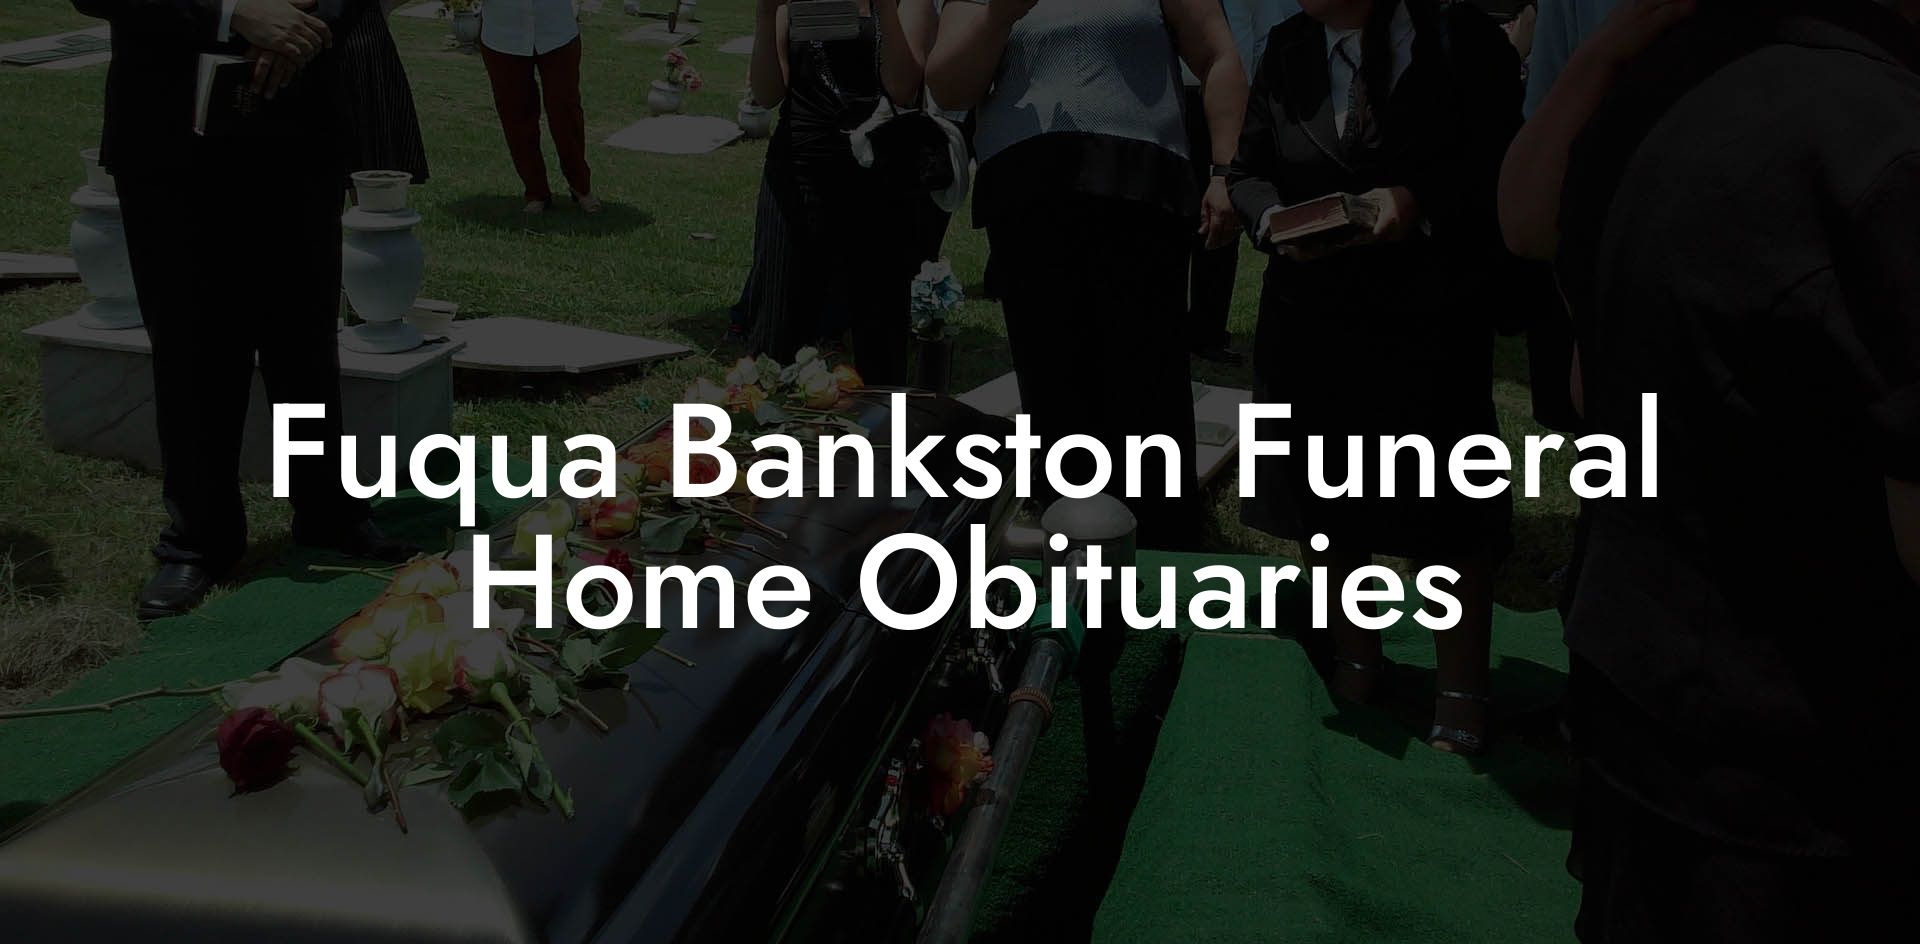 Fuqua Bankston Funeral Home Obituaries